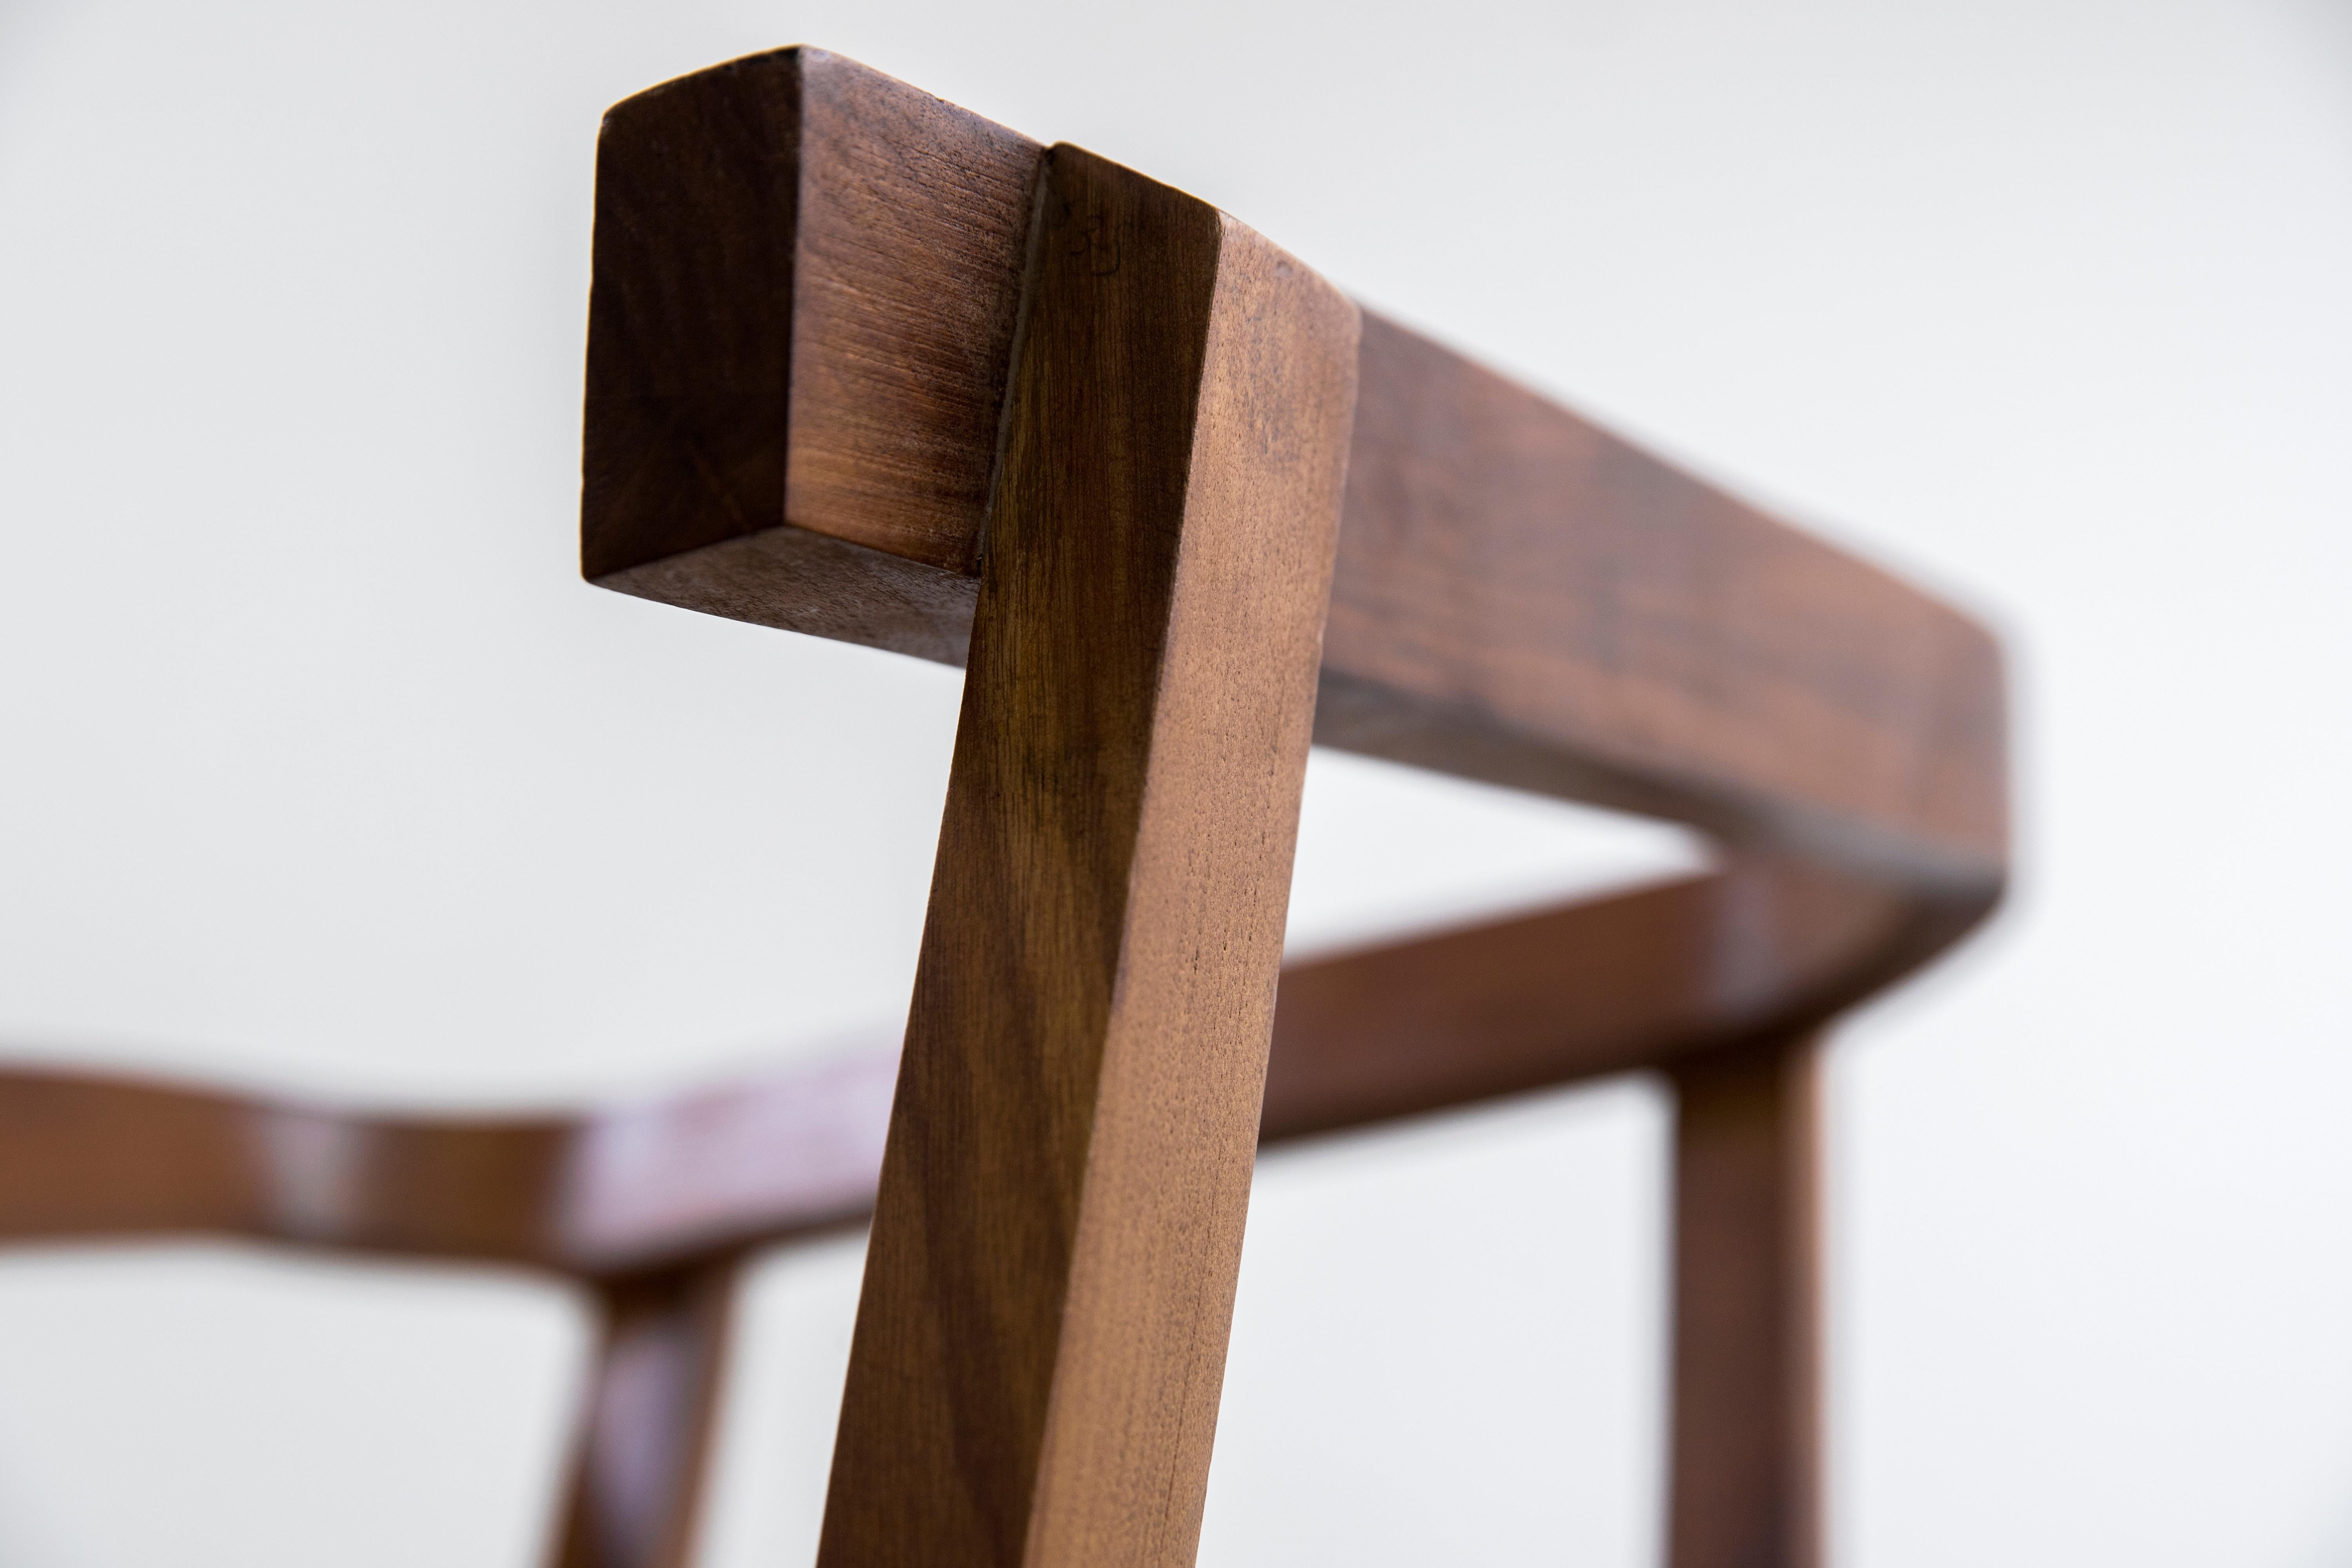 Armchair in Walnut Hardwood by Obiect, Mexican Contemporary Design (Maschinell gefertigt) im Angebot